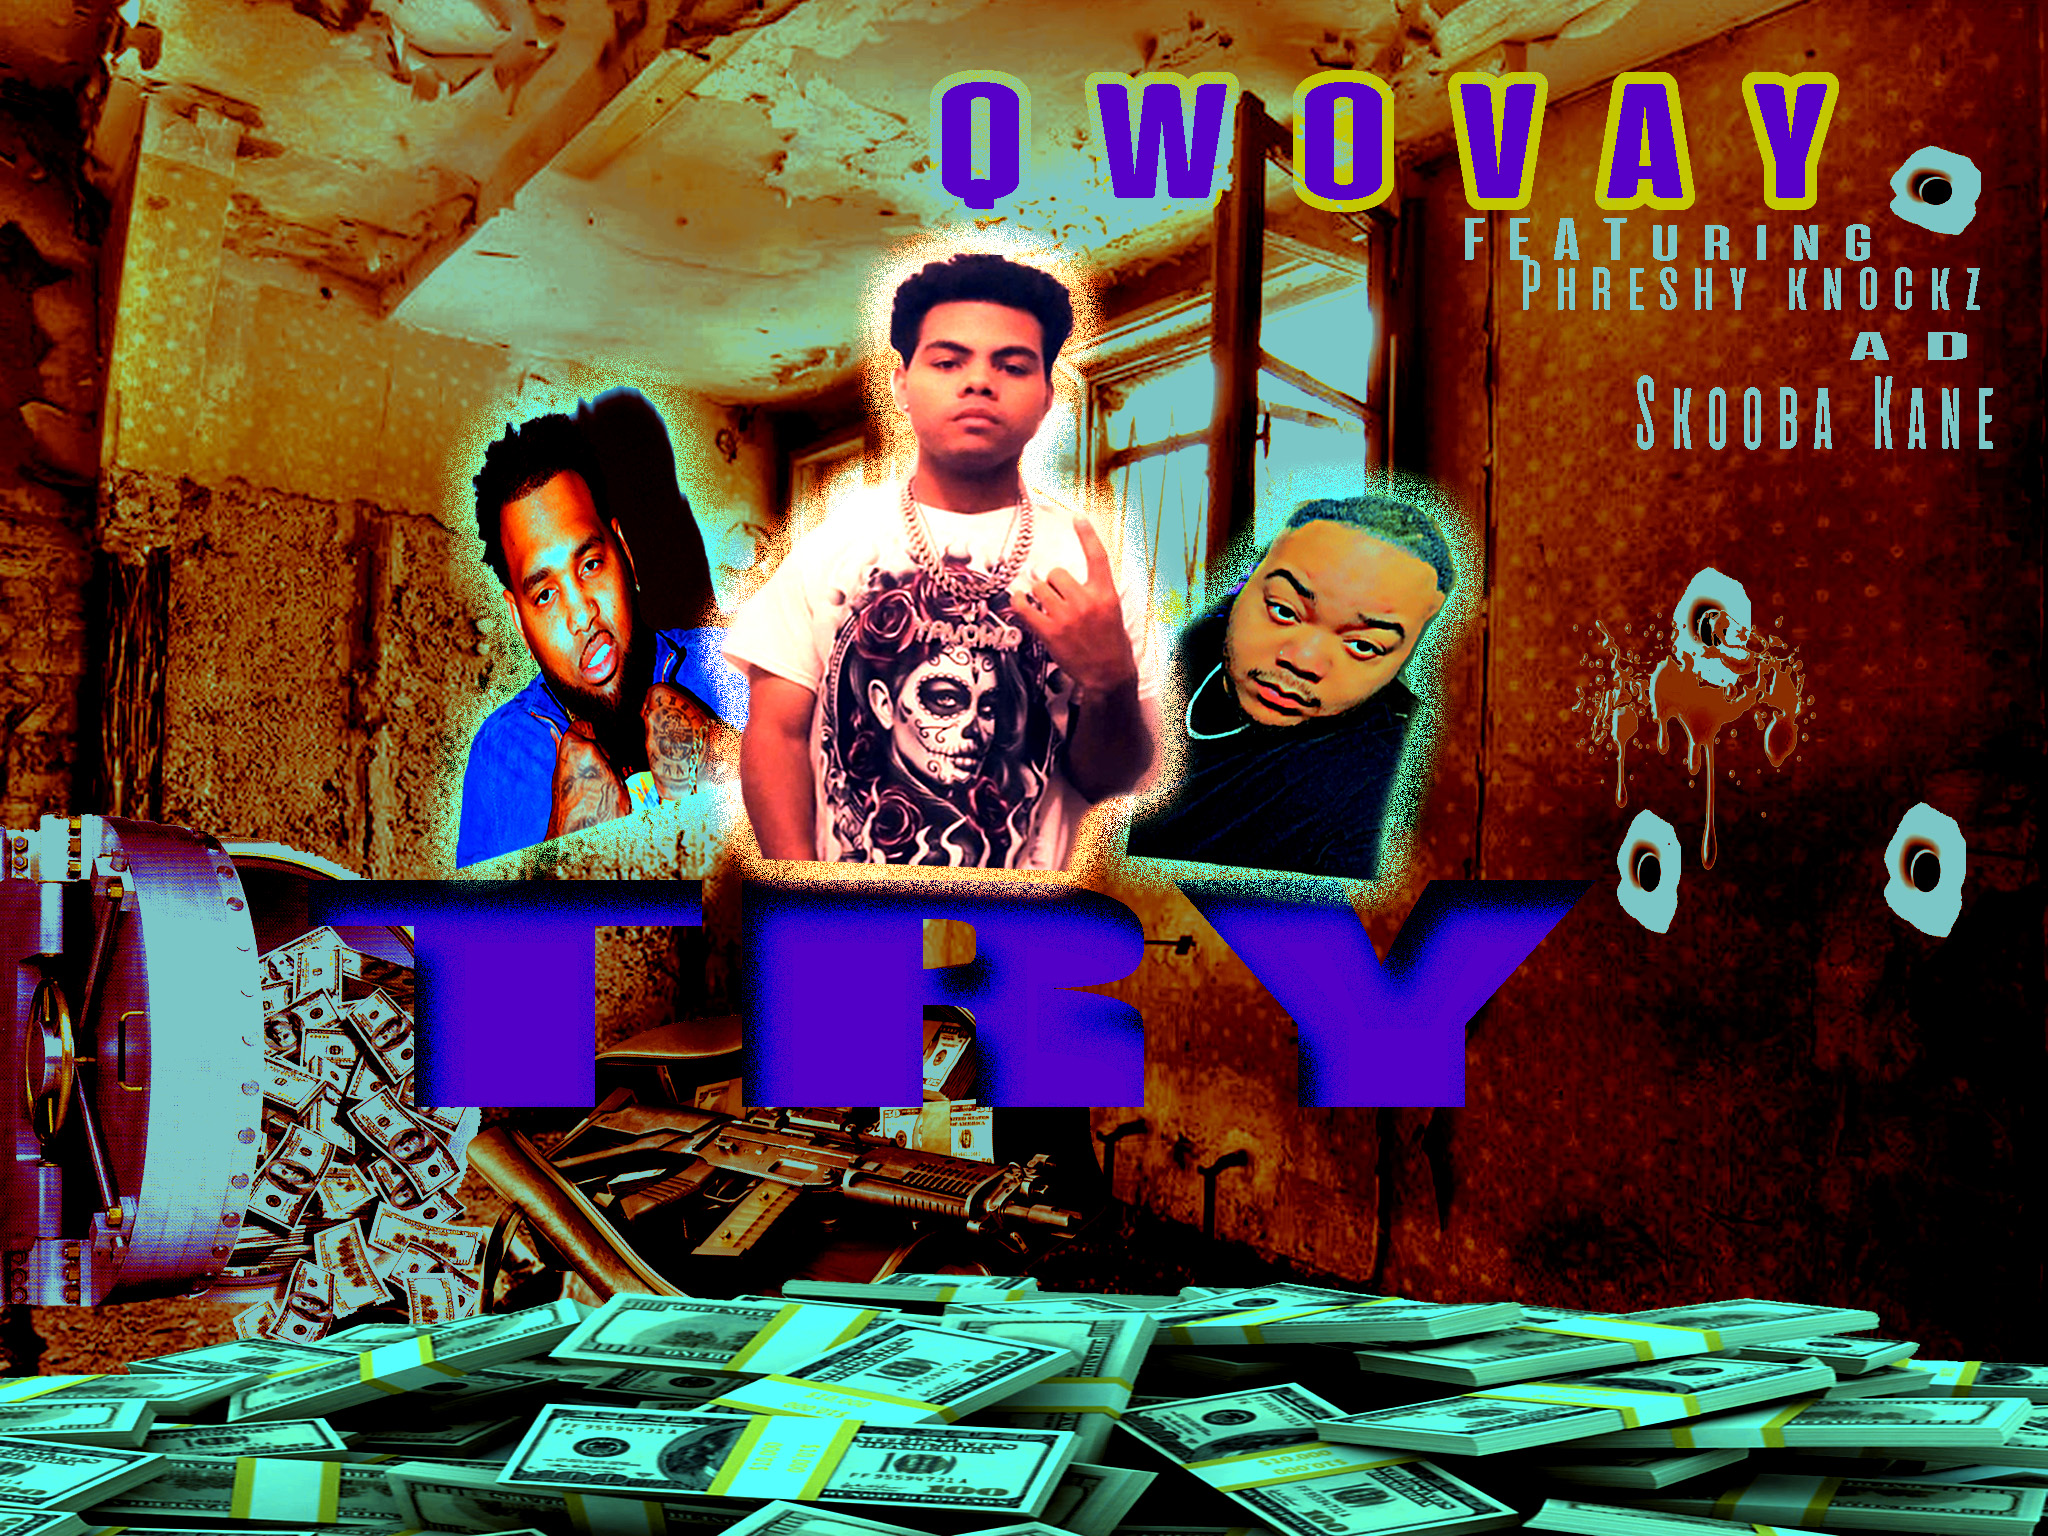 Qwovay feat AD Skooba kane and Phreshy Knockz